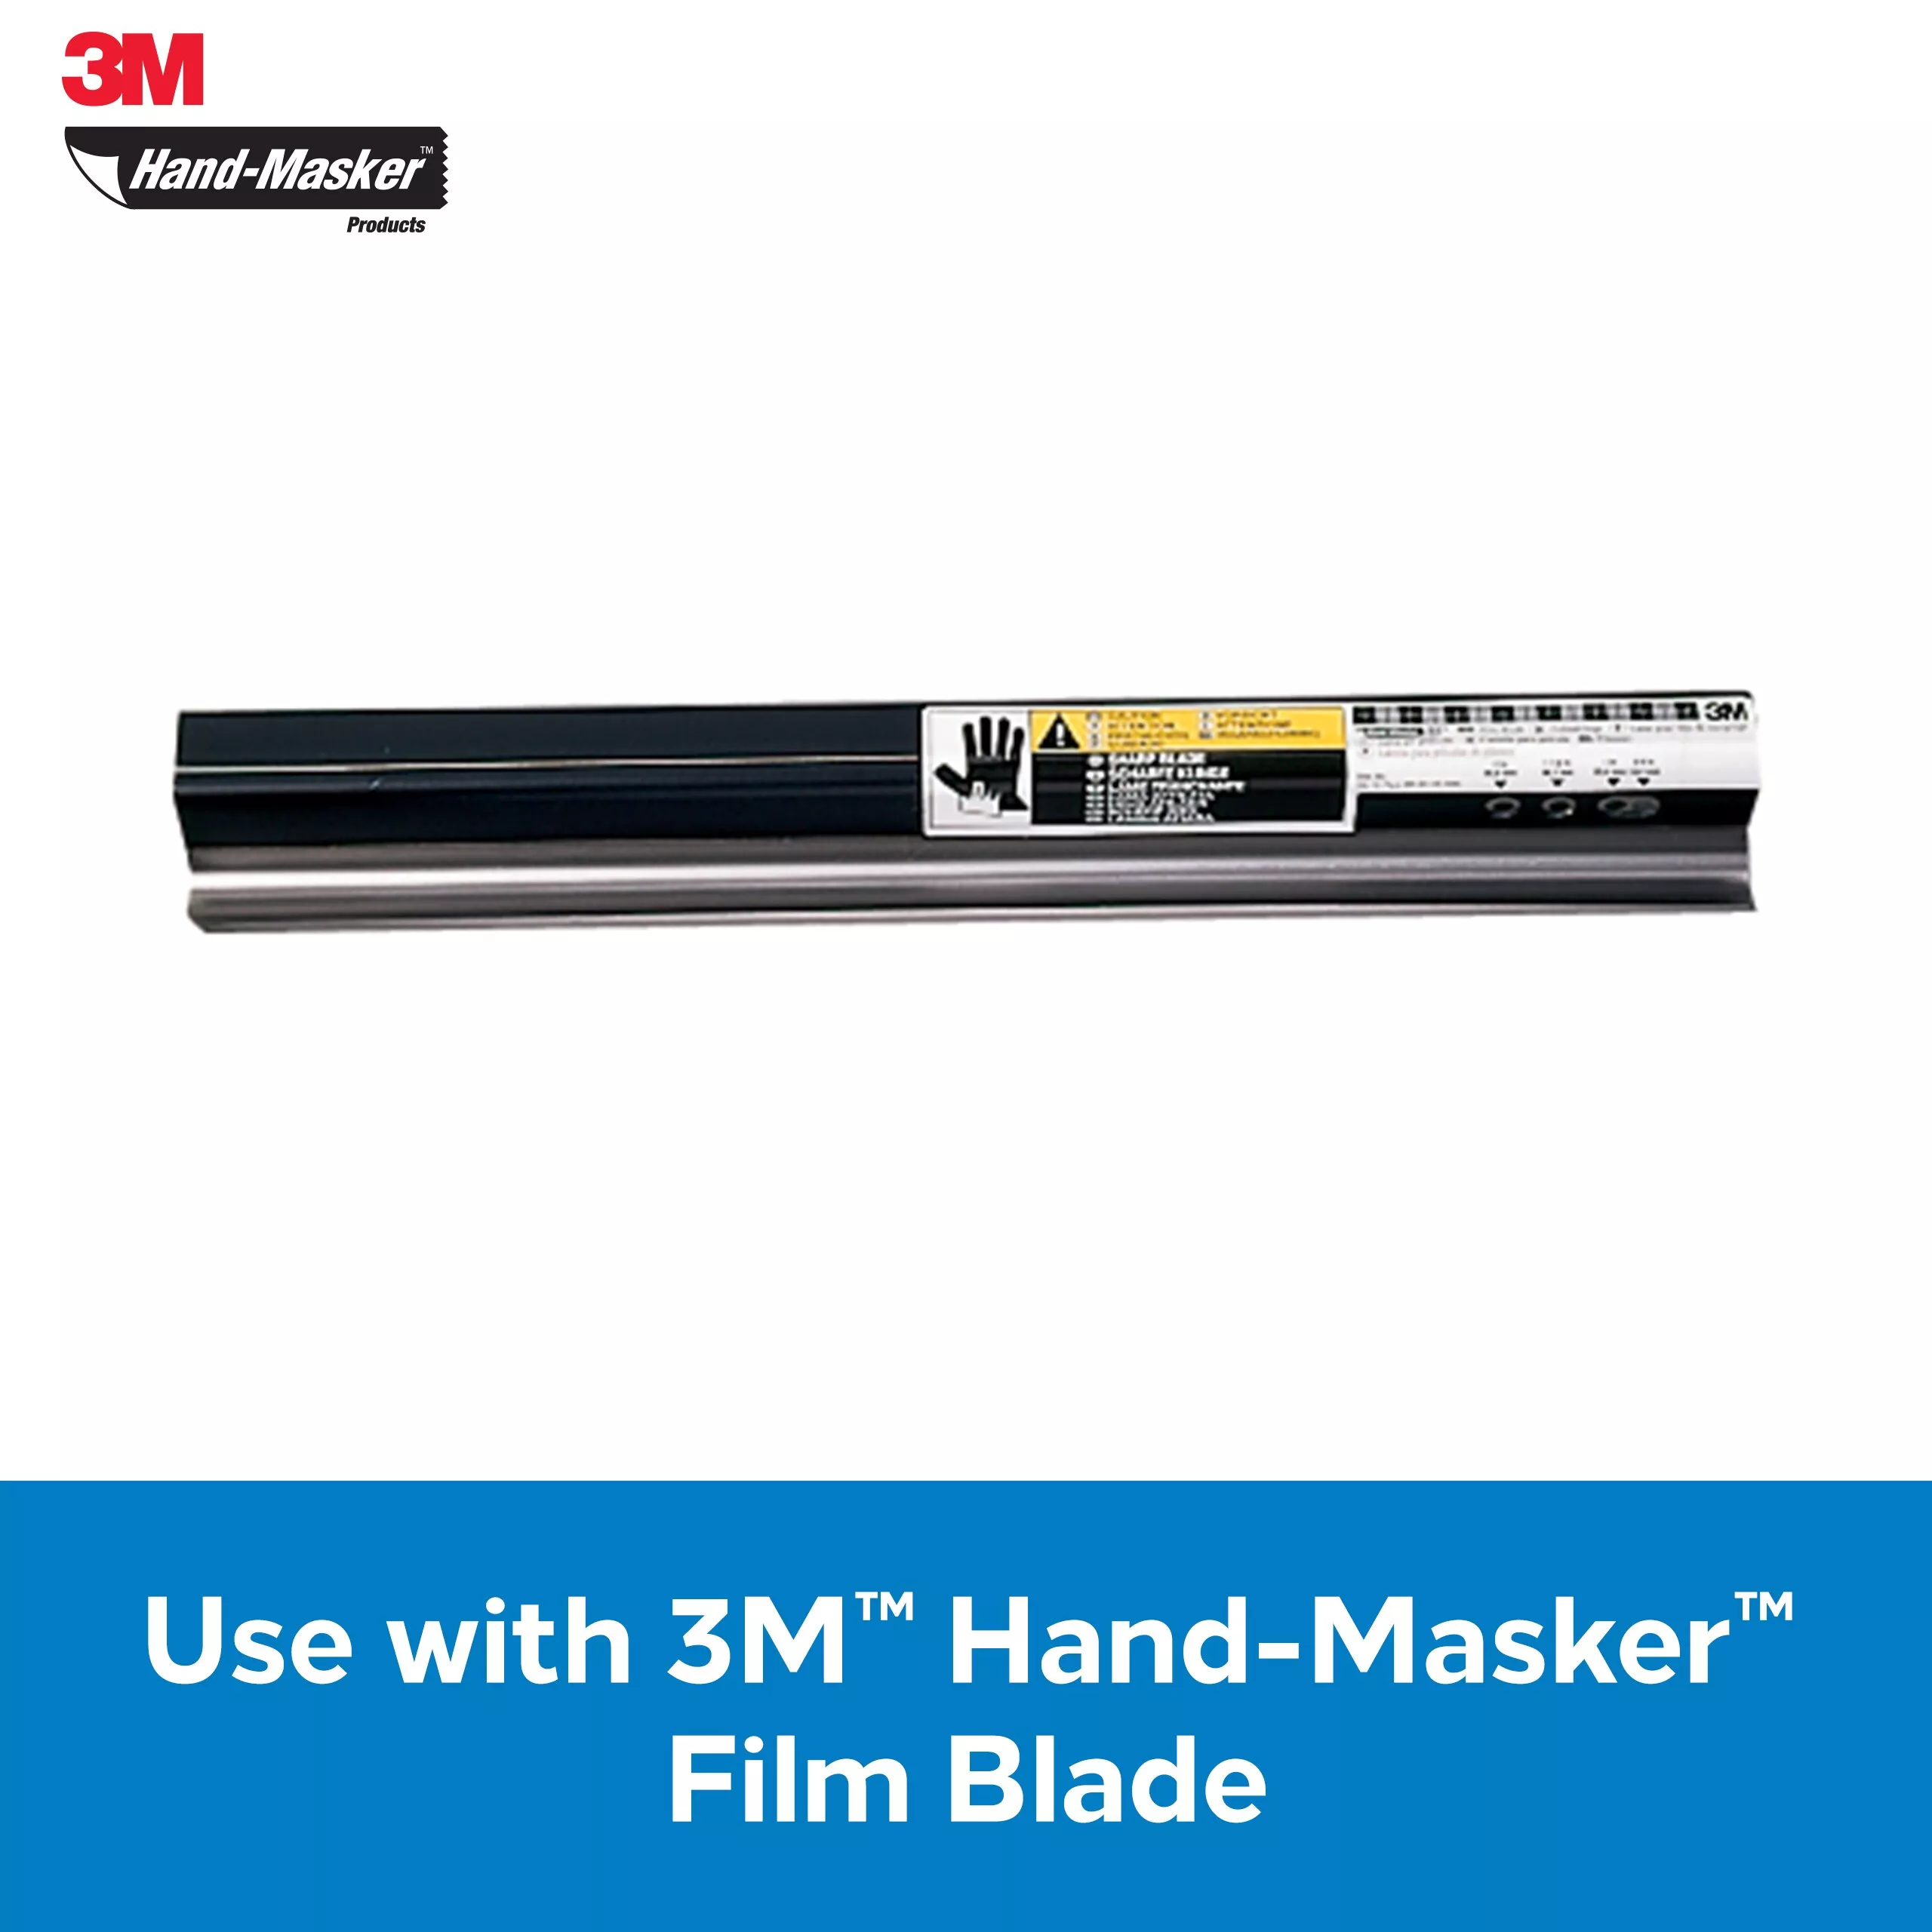 SKU 7100285005 | 3M™ Hand-Masker™ Dispenser M3000